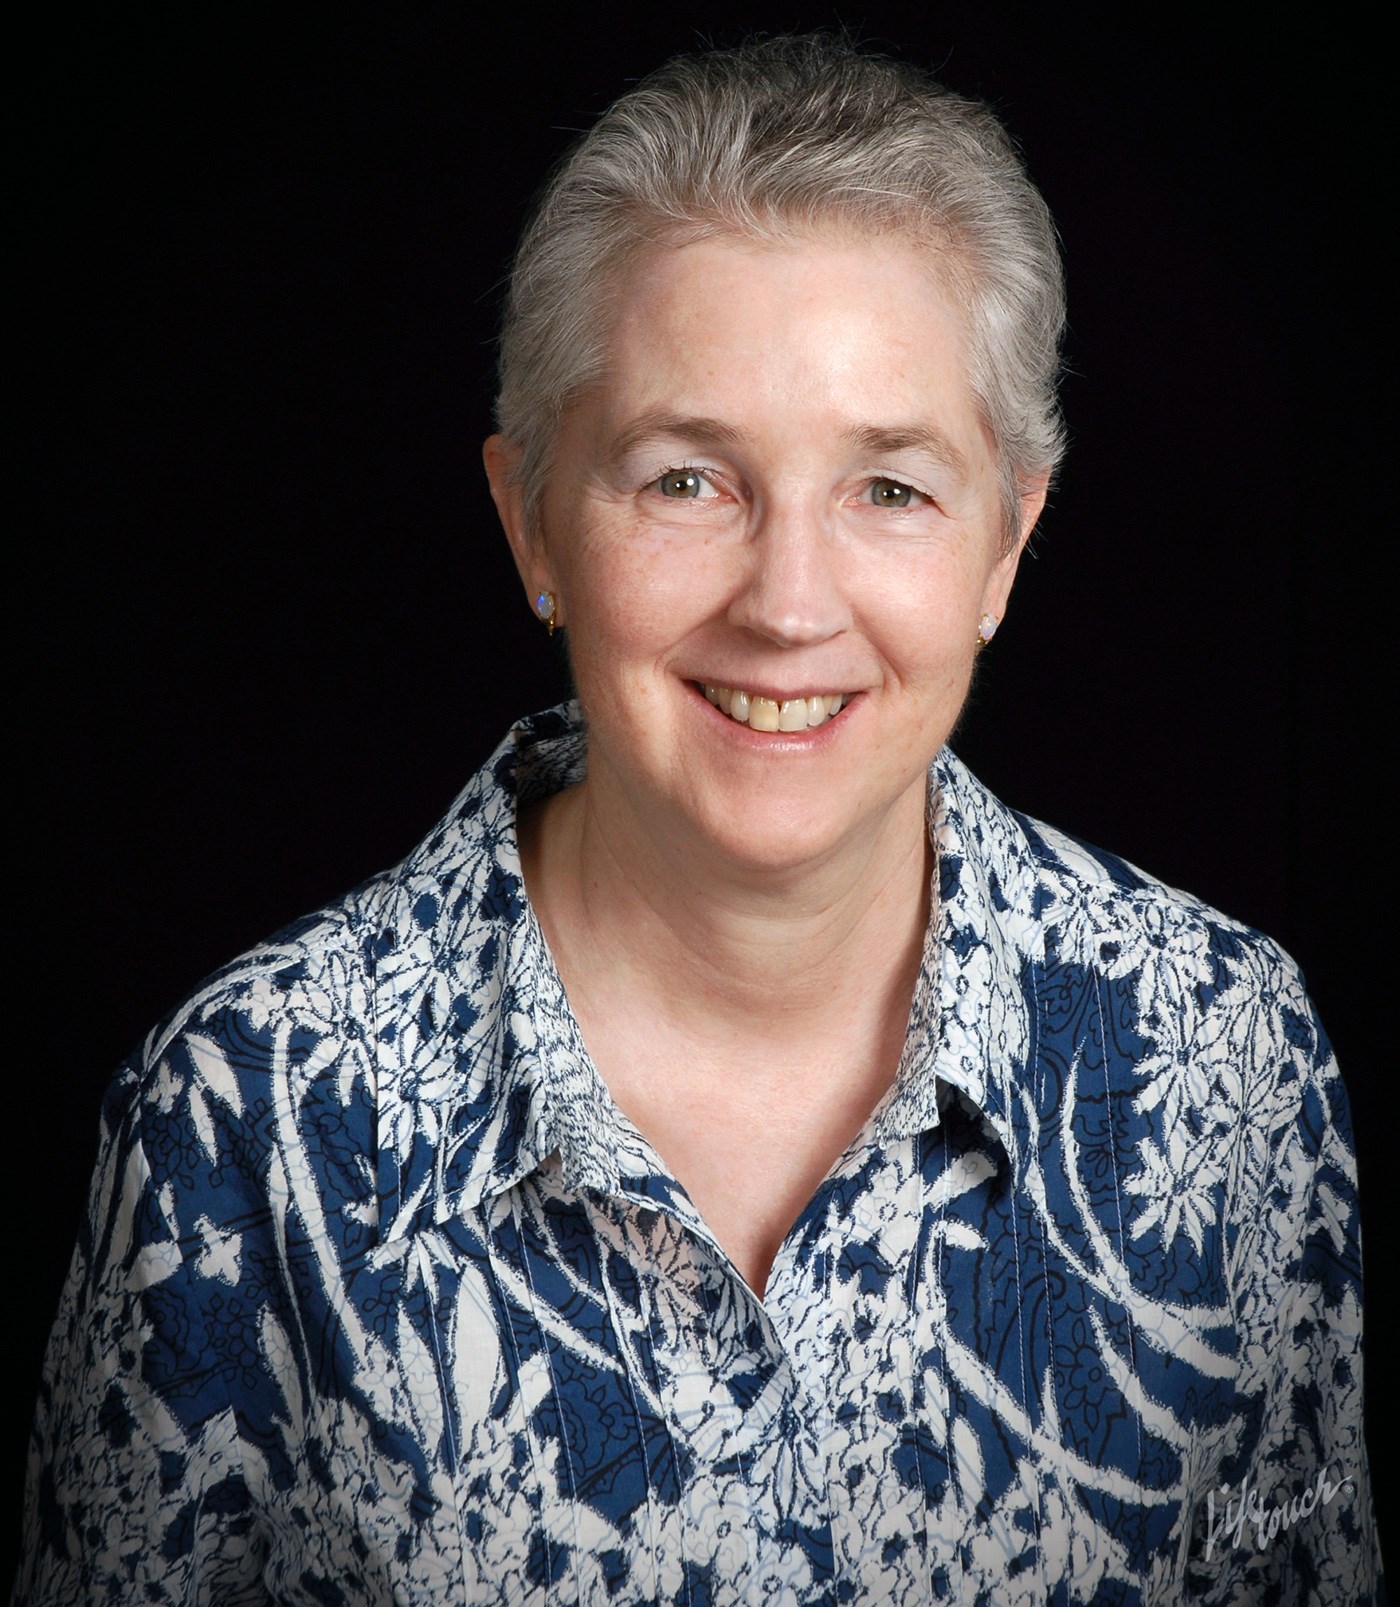 Karen Daniels is an Associate Professor Emerita in the Computer Science Department in the College of Sciences at UMass Lowell.